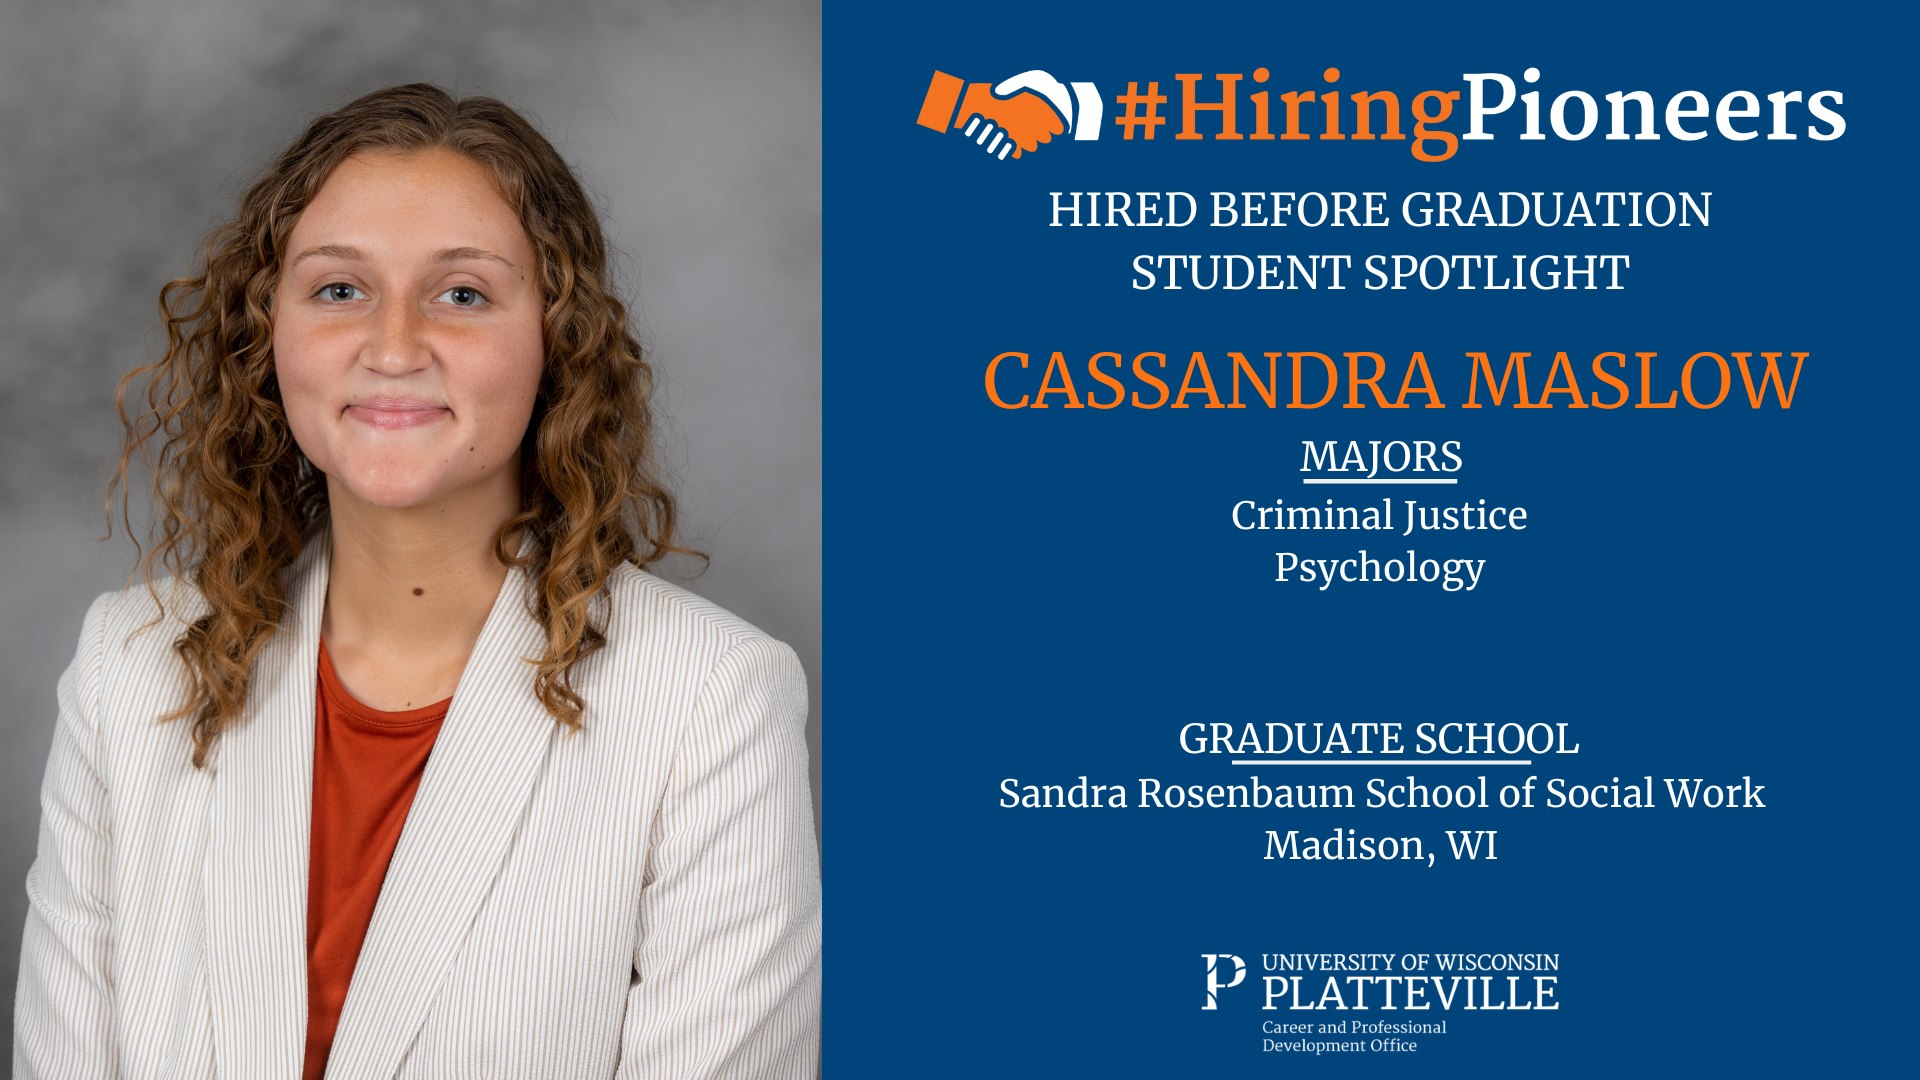 Cassandra Maslow, Hired Before Graduation